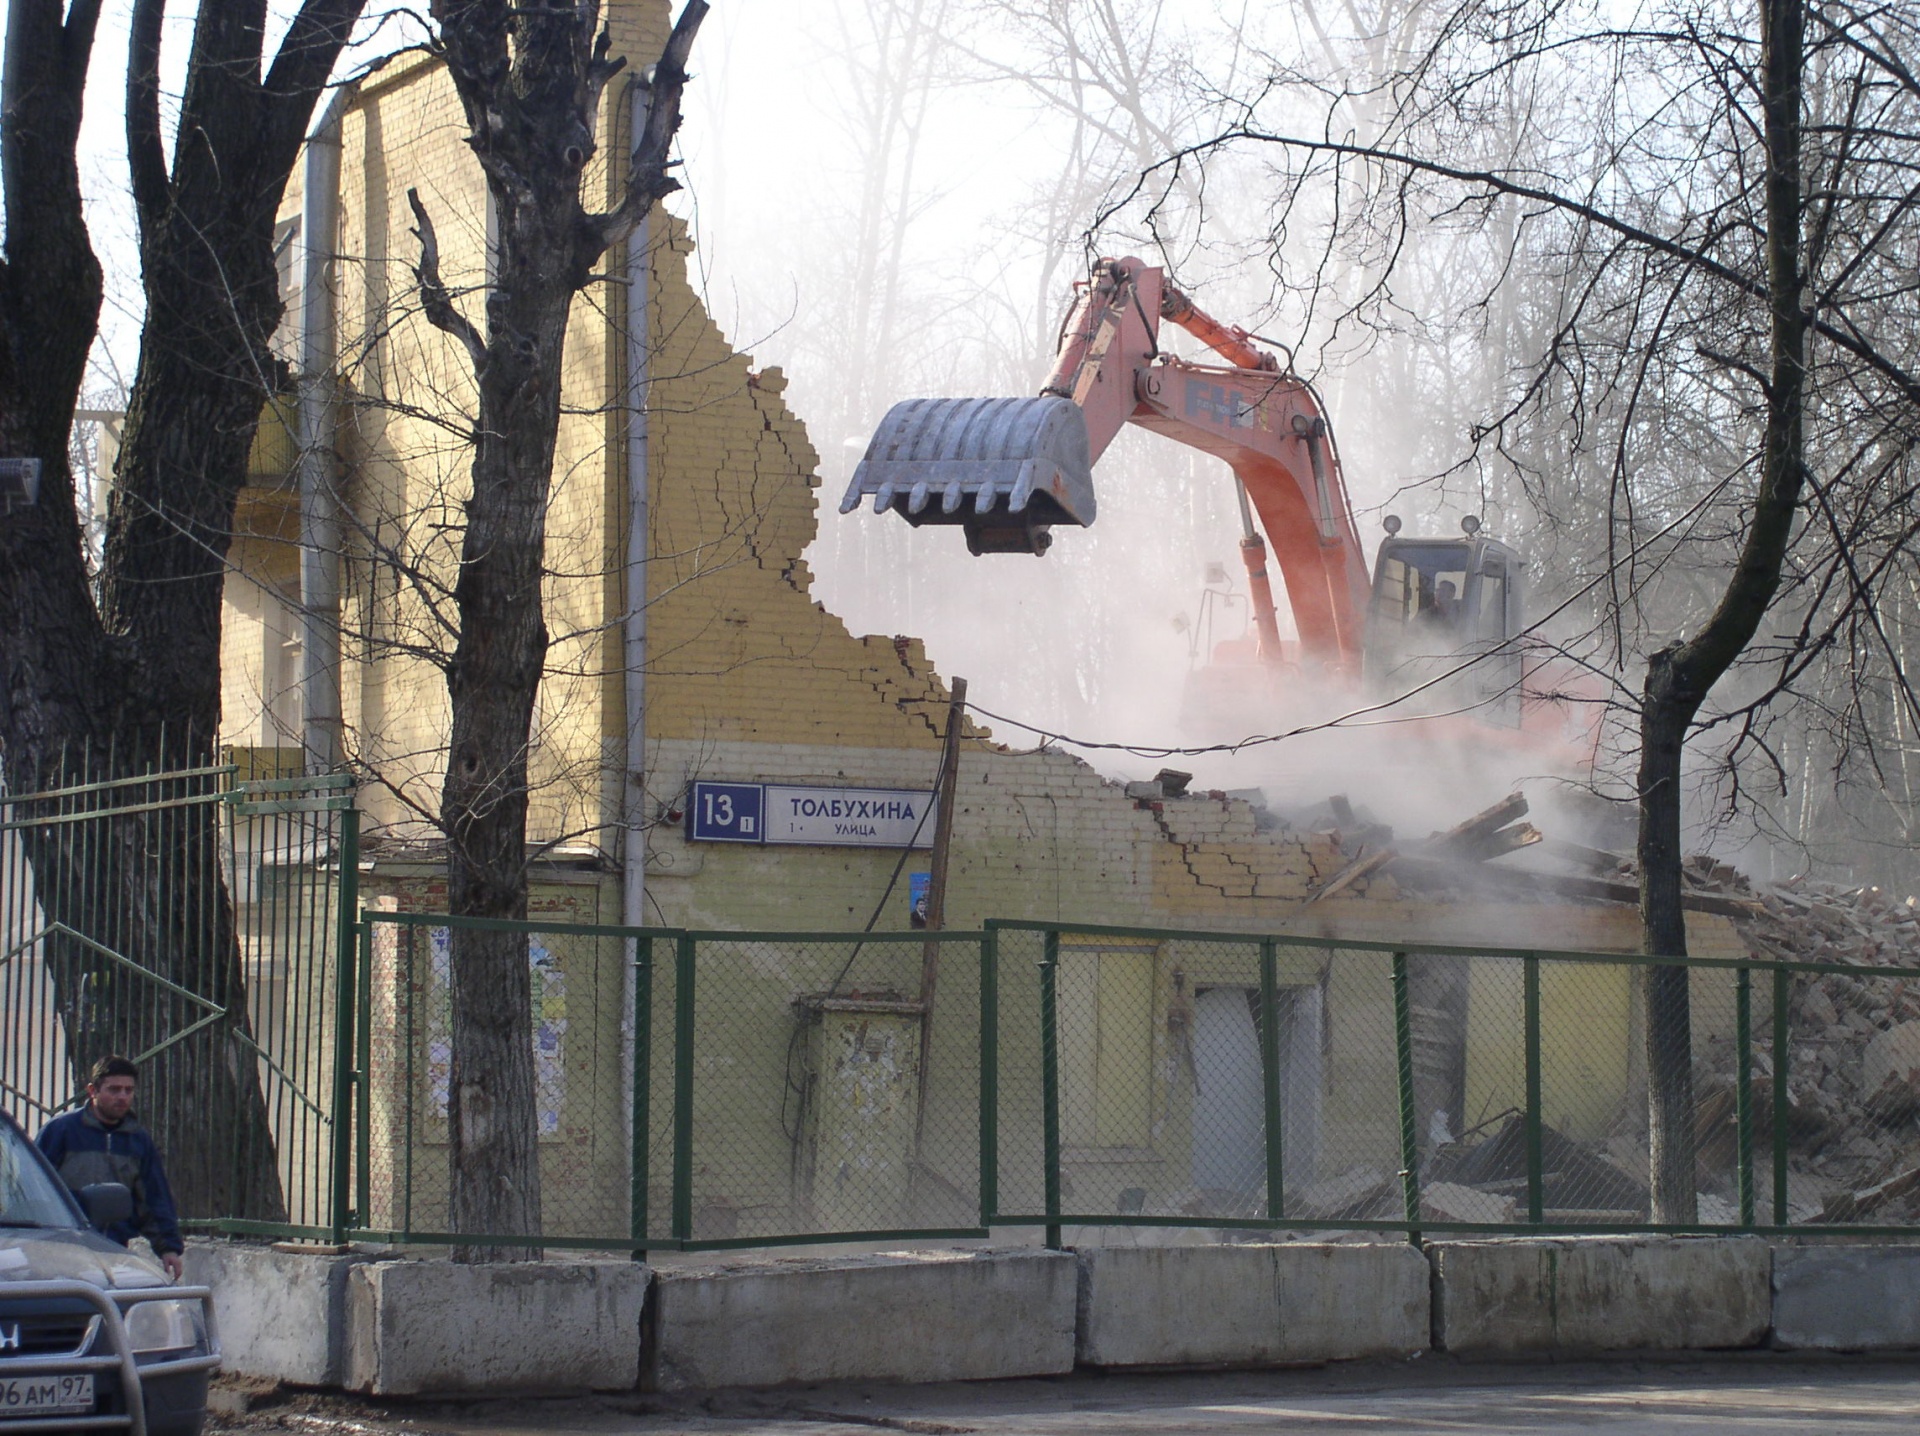 Excavator Demolishes Brick House